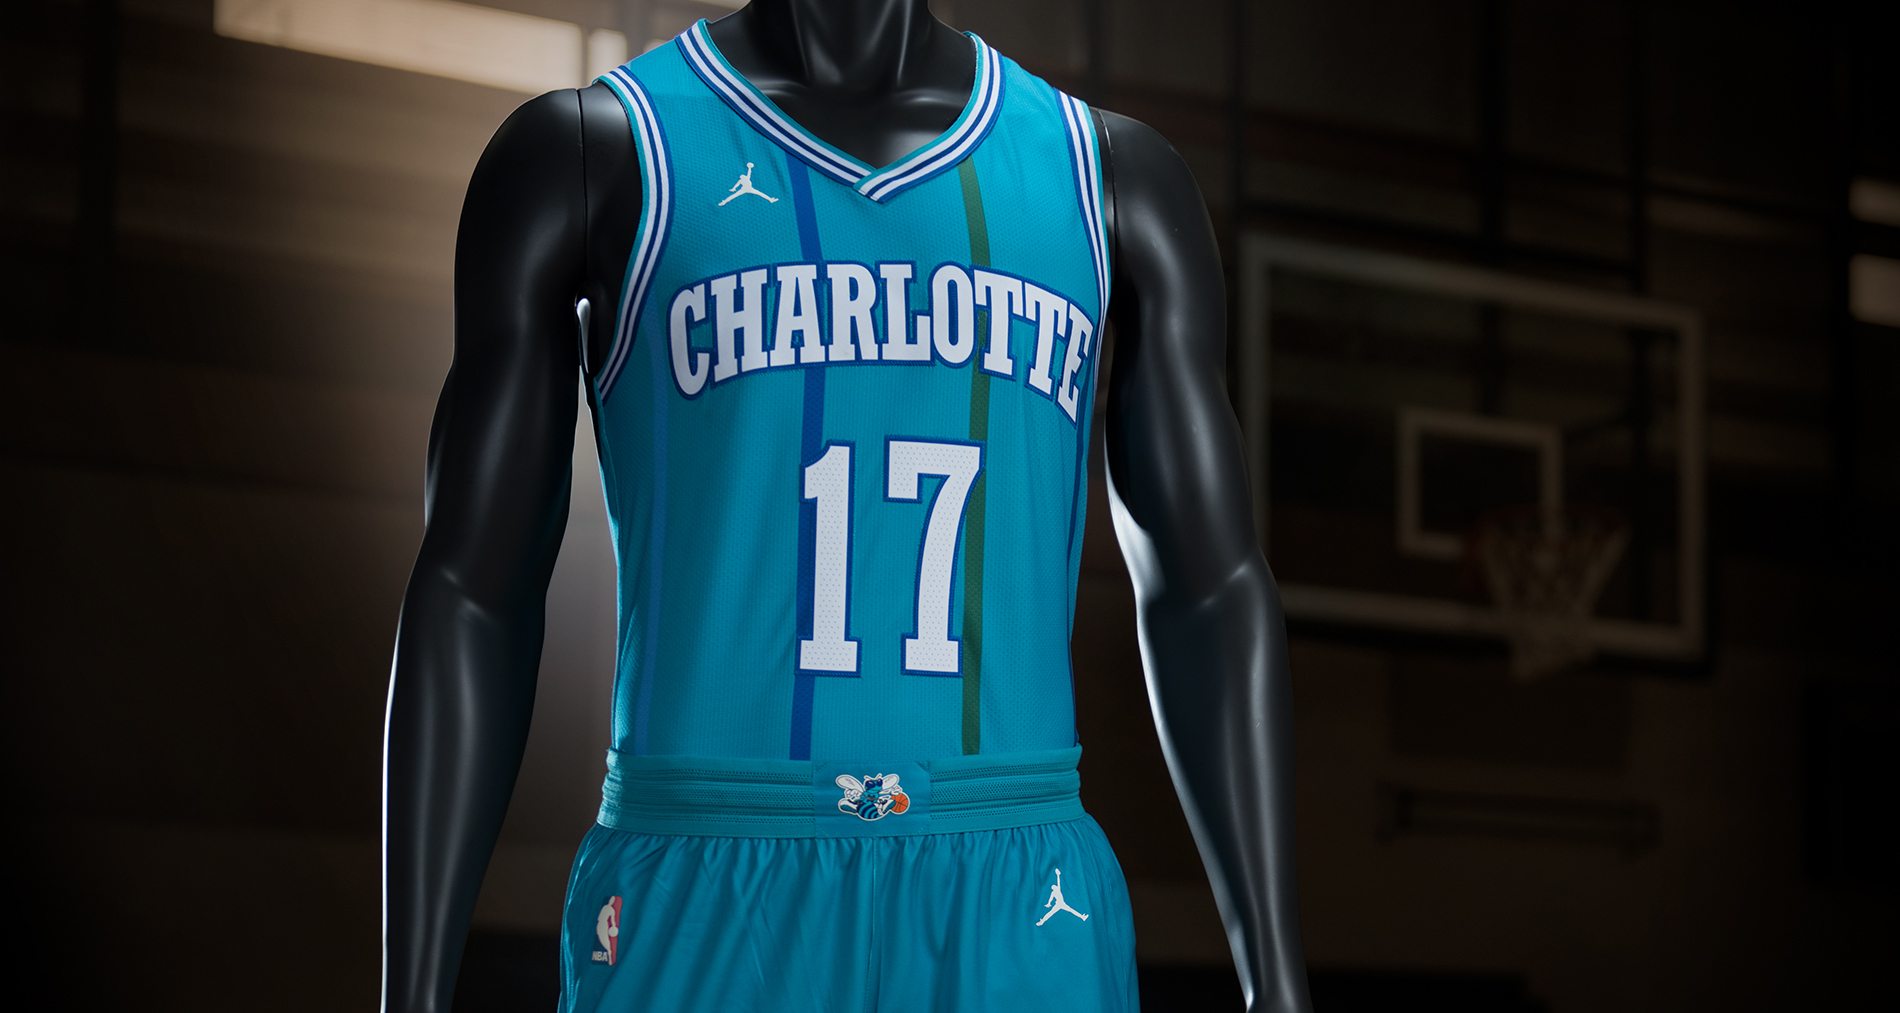 Charlotte Hornets Classic Edition Uniforms